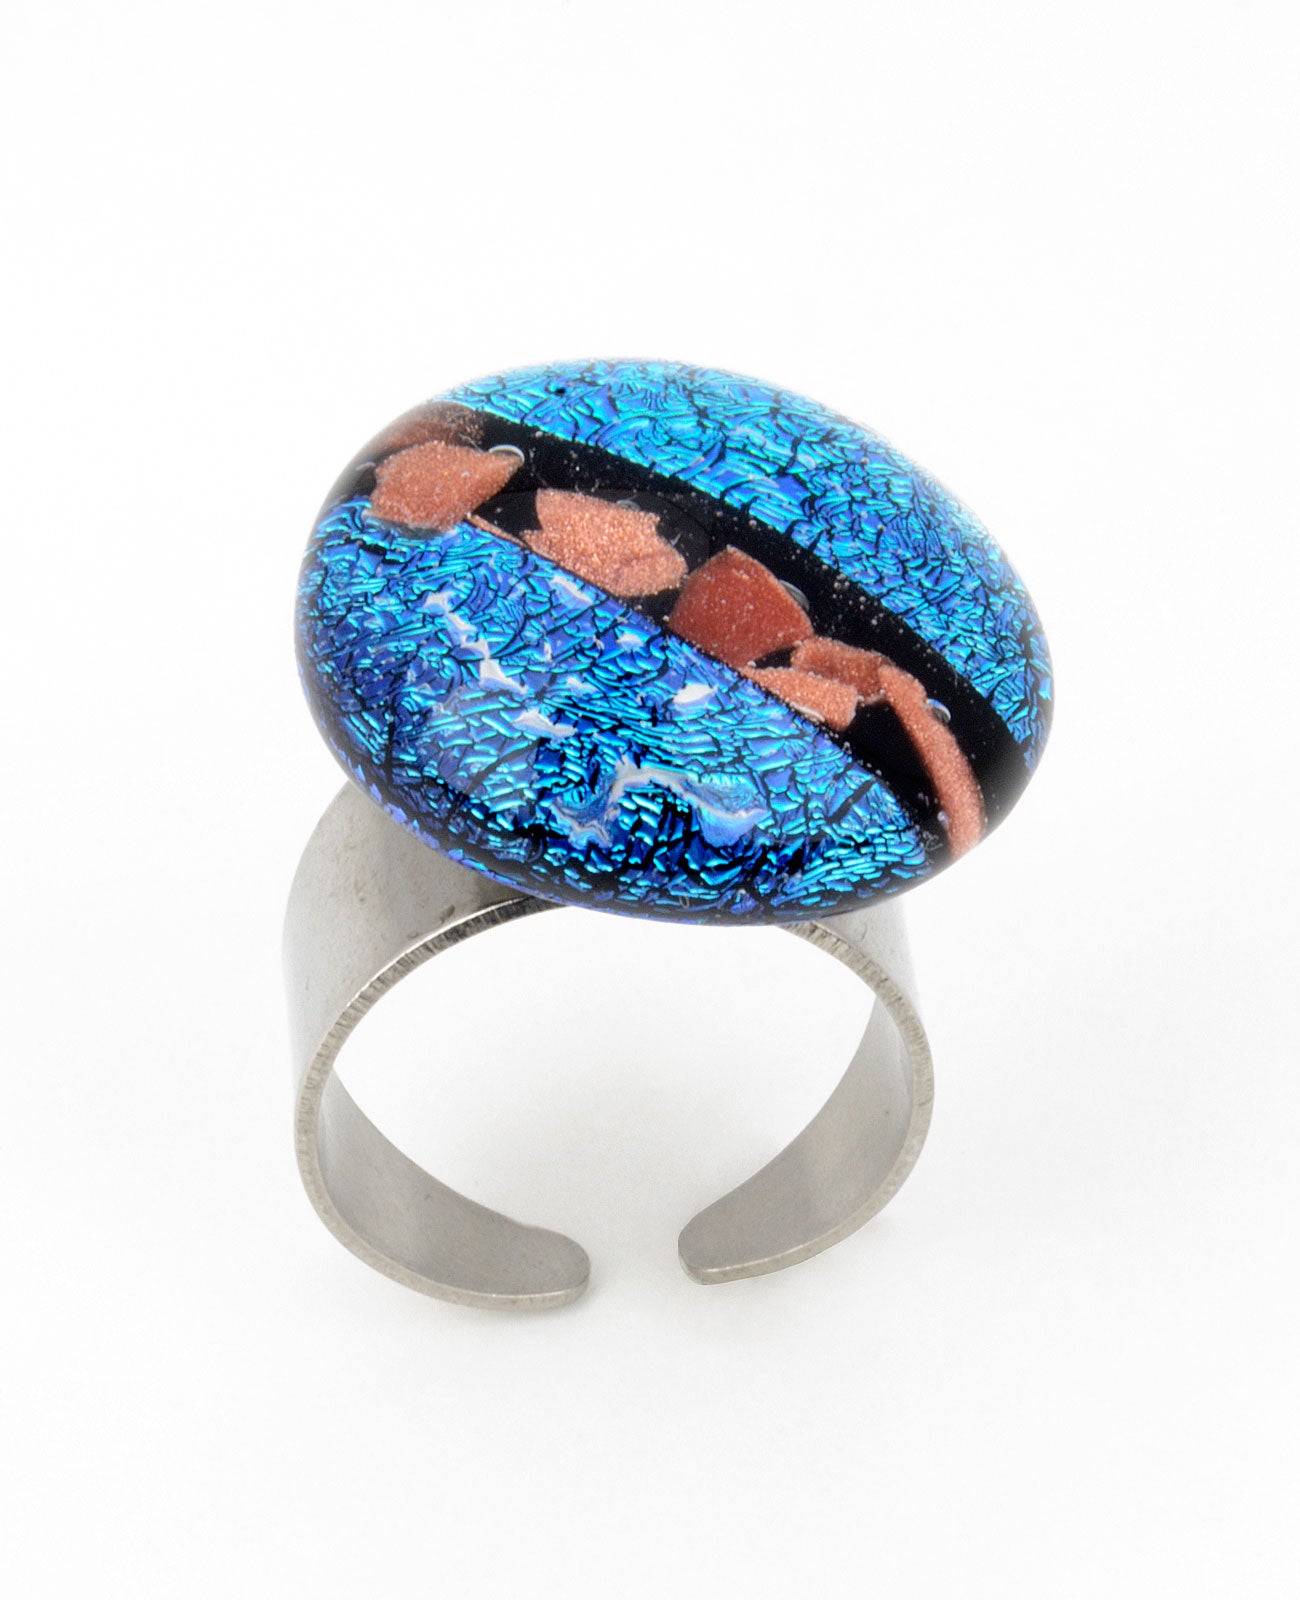 Planet Ring in Murano Glass - Vetri D'Arte